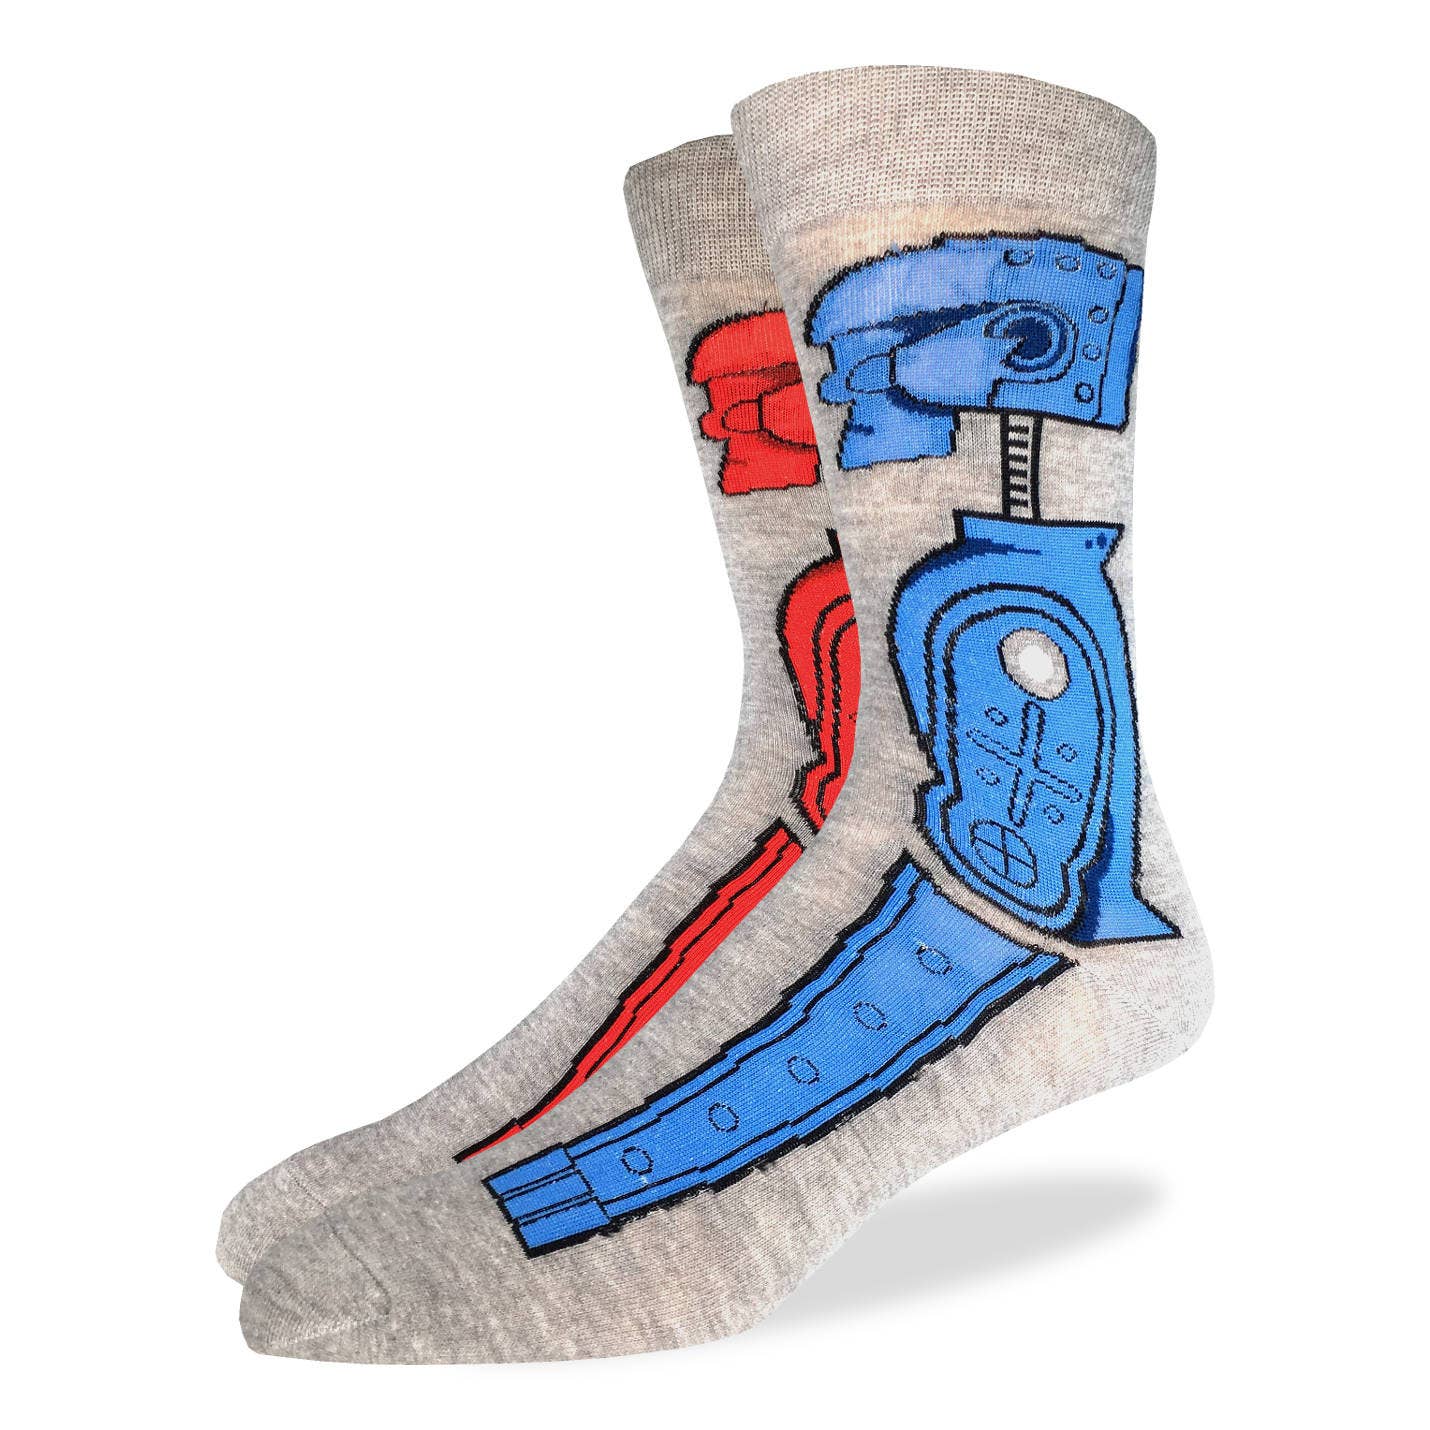 Men's Rock 'em Sock 'em Socks - Hidden Gems Novelty